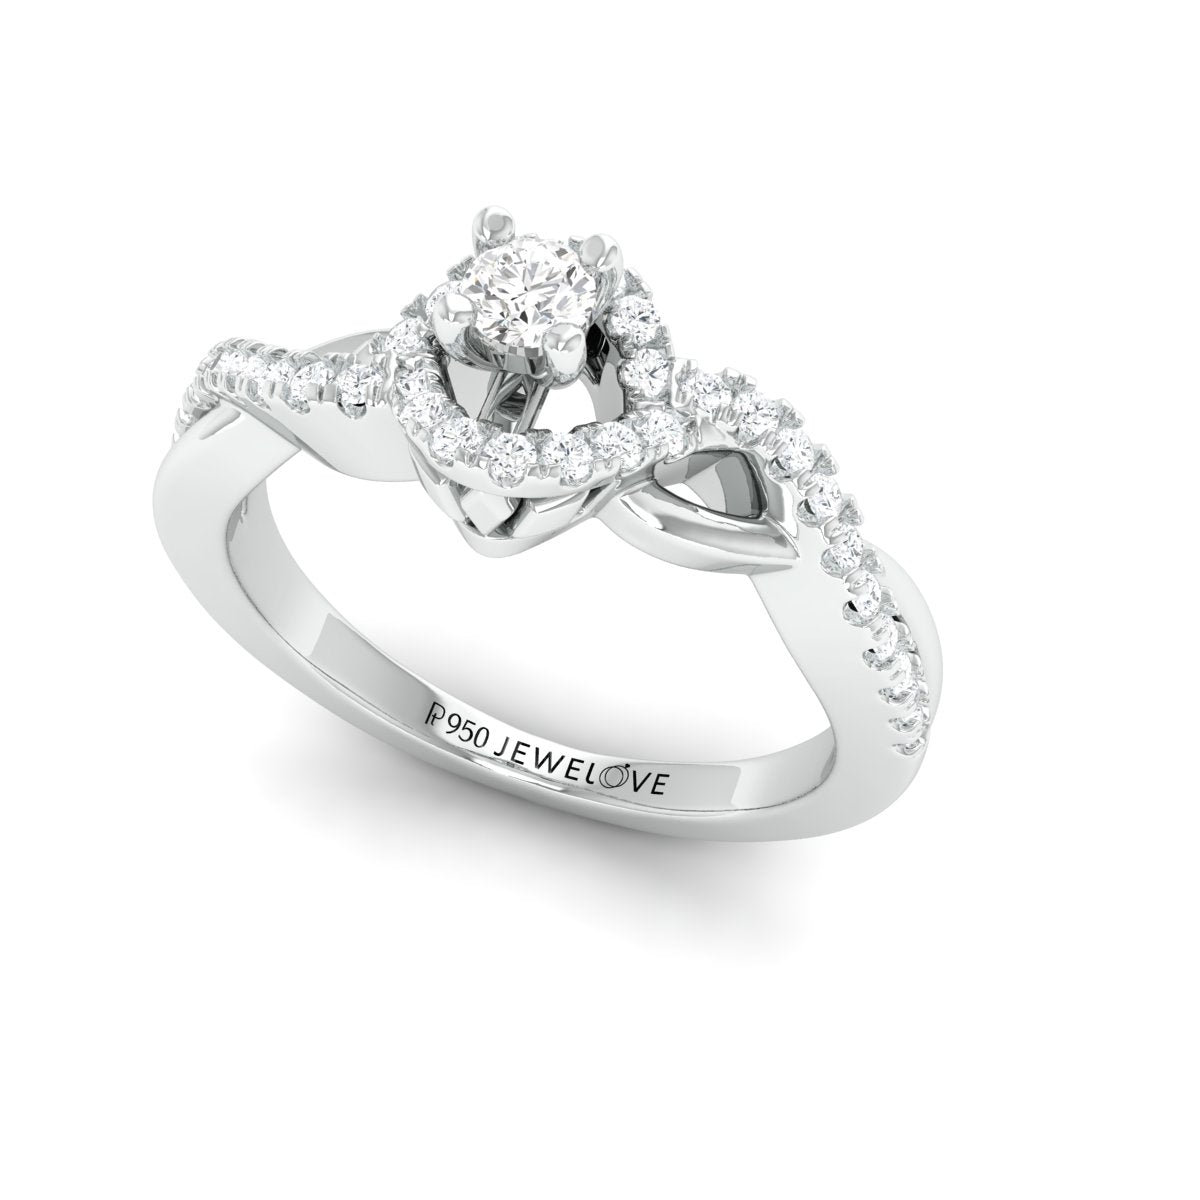 Designer 0.25 cts. Solitaire Platinum Ring with Diamond Accents JL PT 975